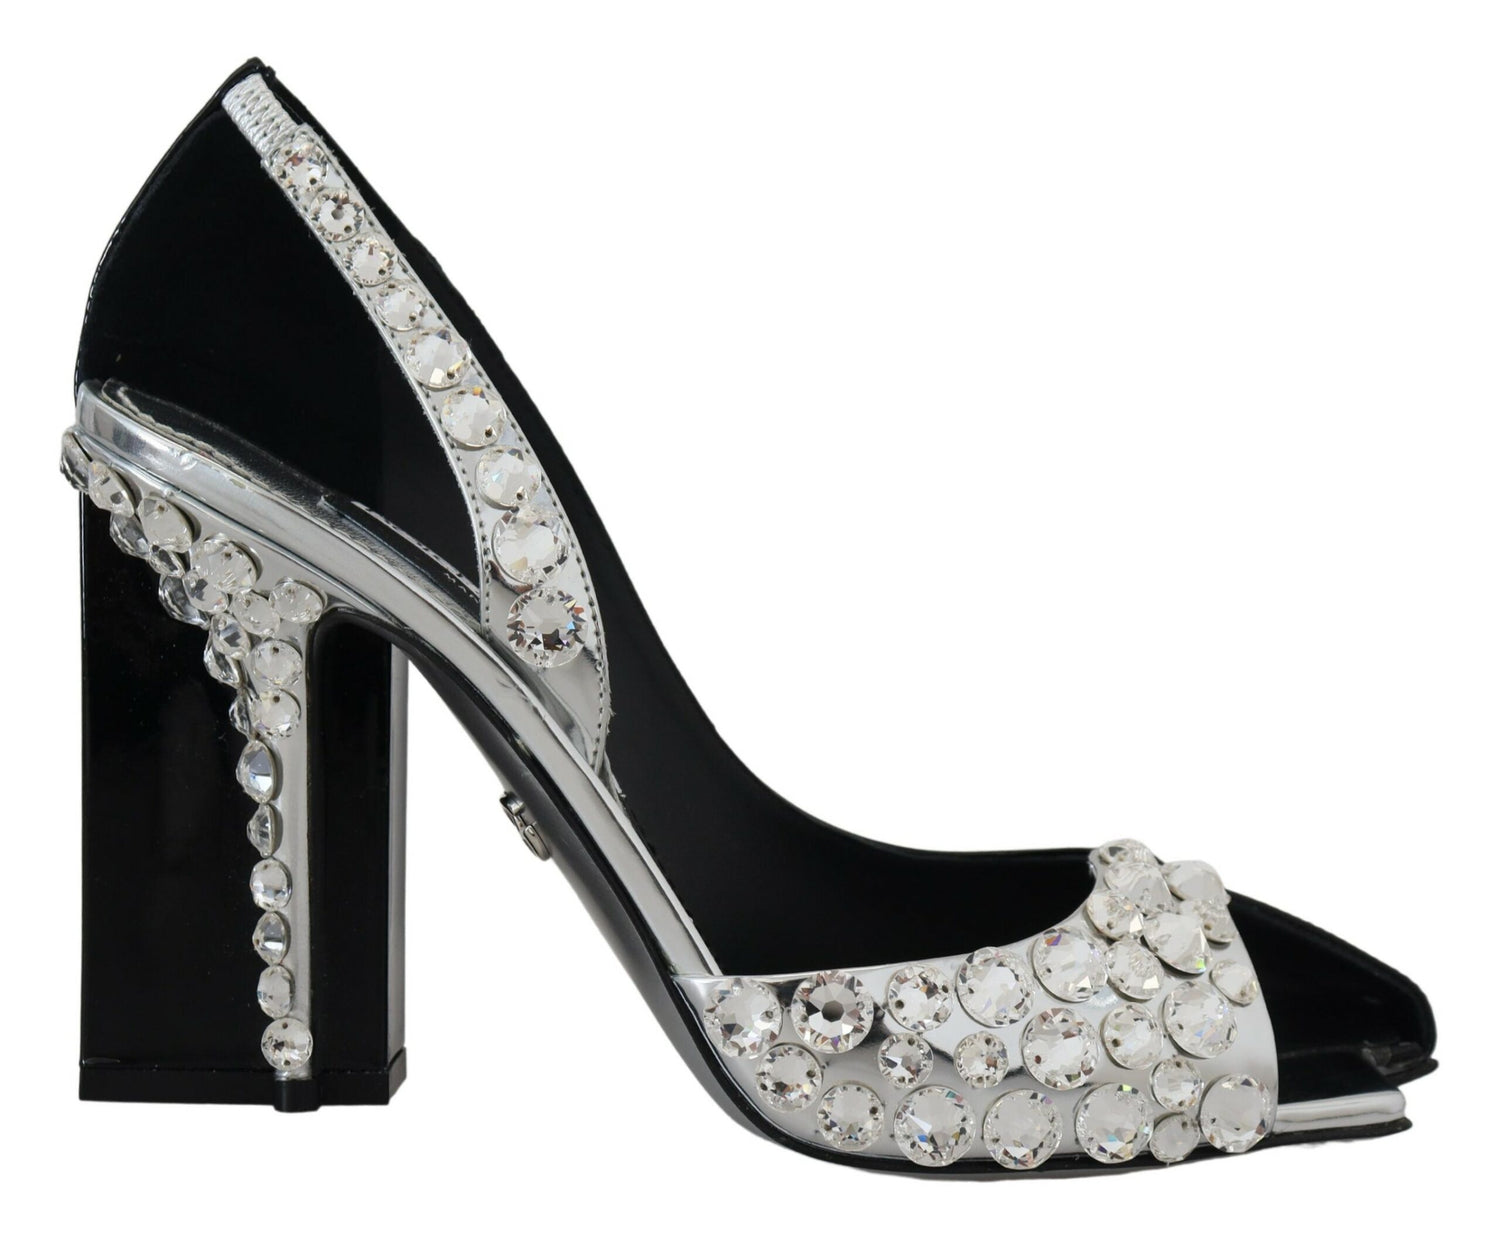 Latest Heels Design Click for Full Video👇 https://youtu.be/rZ0LYMHUl_M |  Stylish heels, Elegant shoes heels, Heels outfits